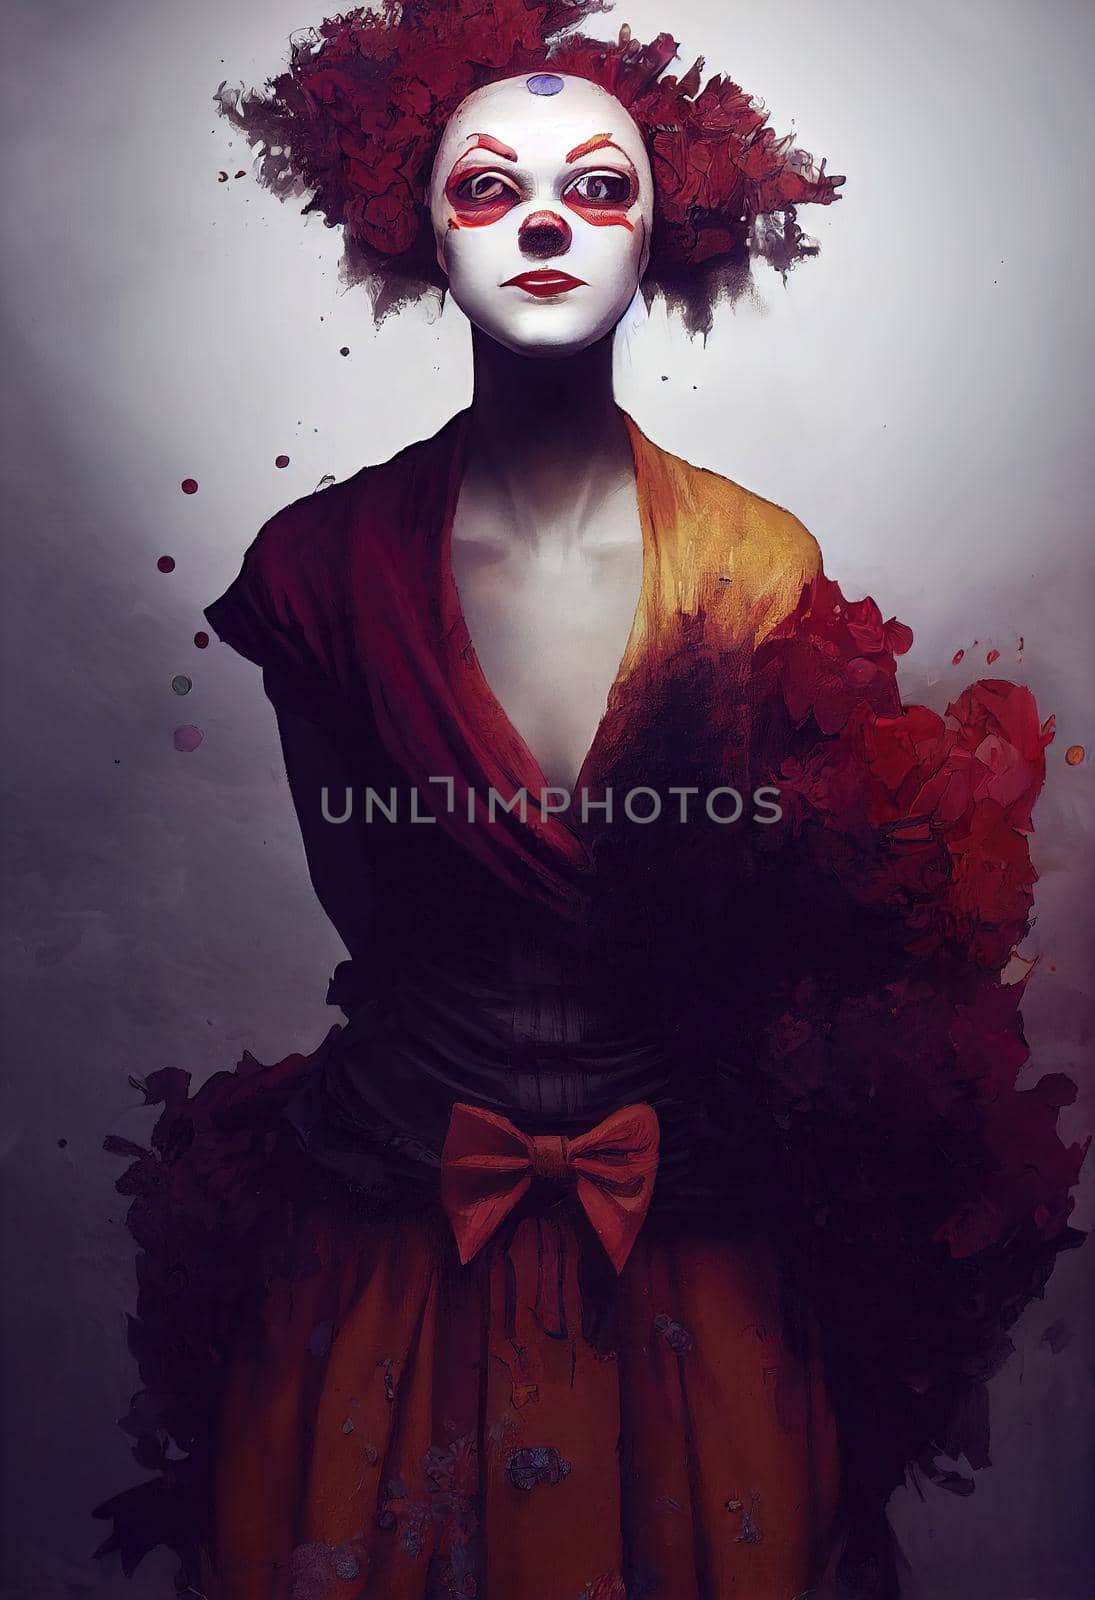 Portrait of a beautiful clown girl, 3d illustration